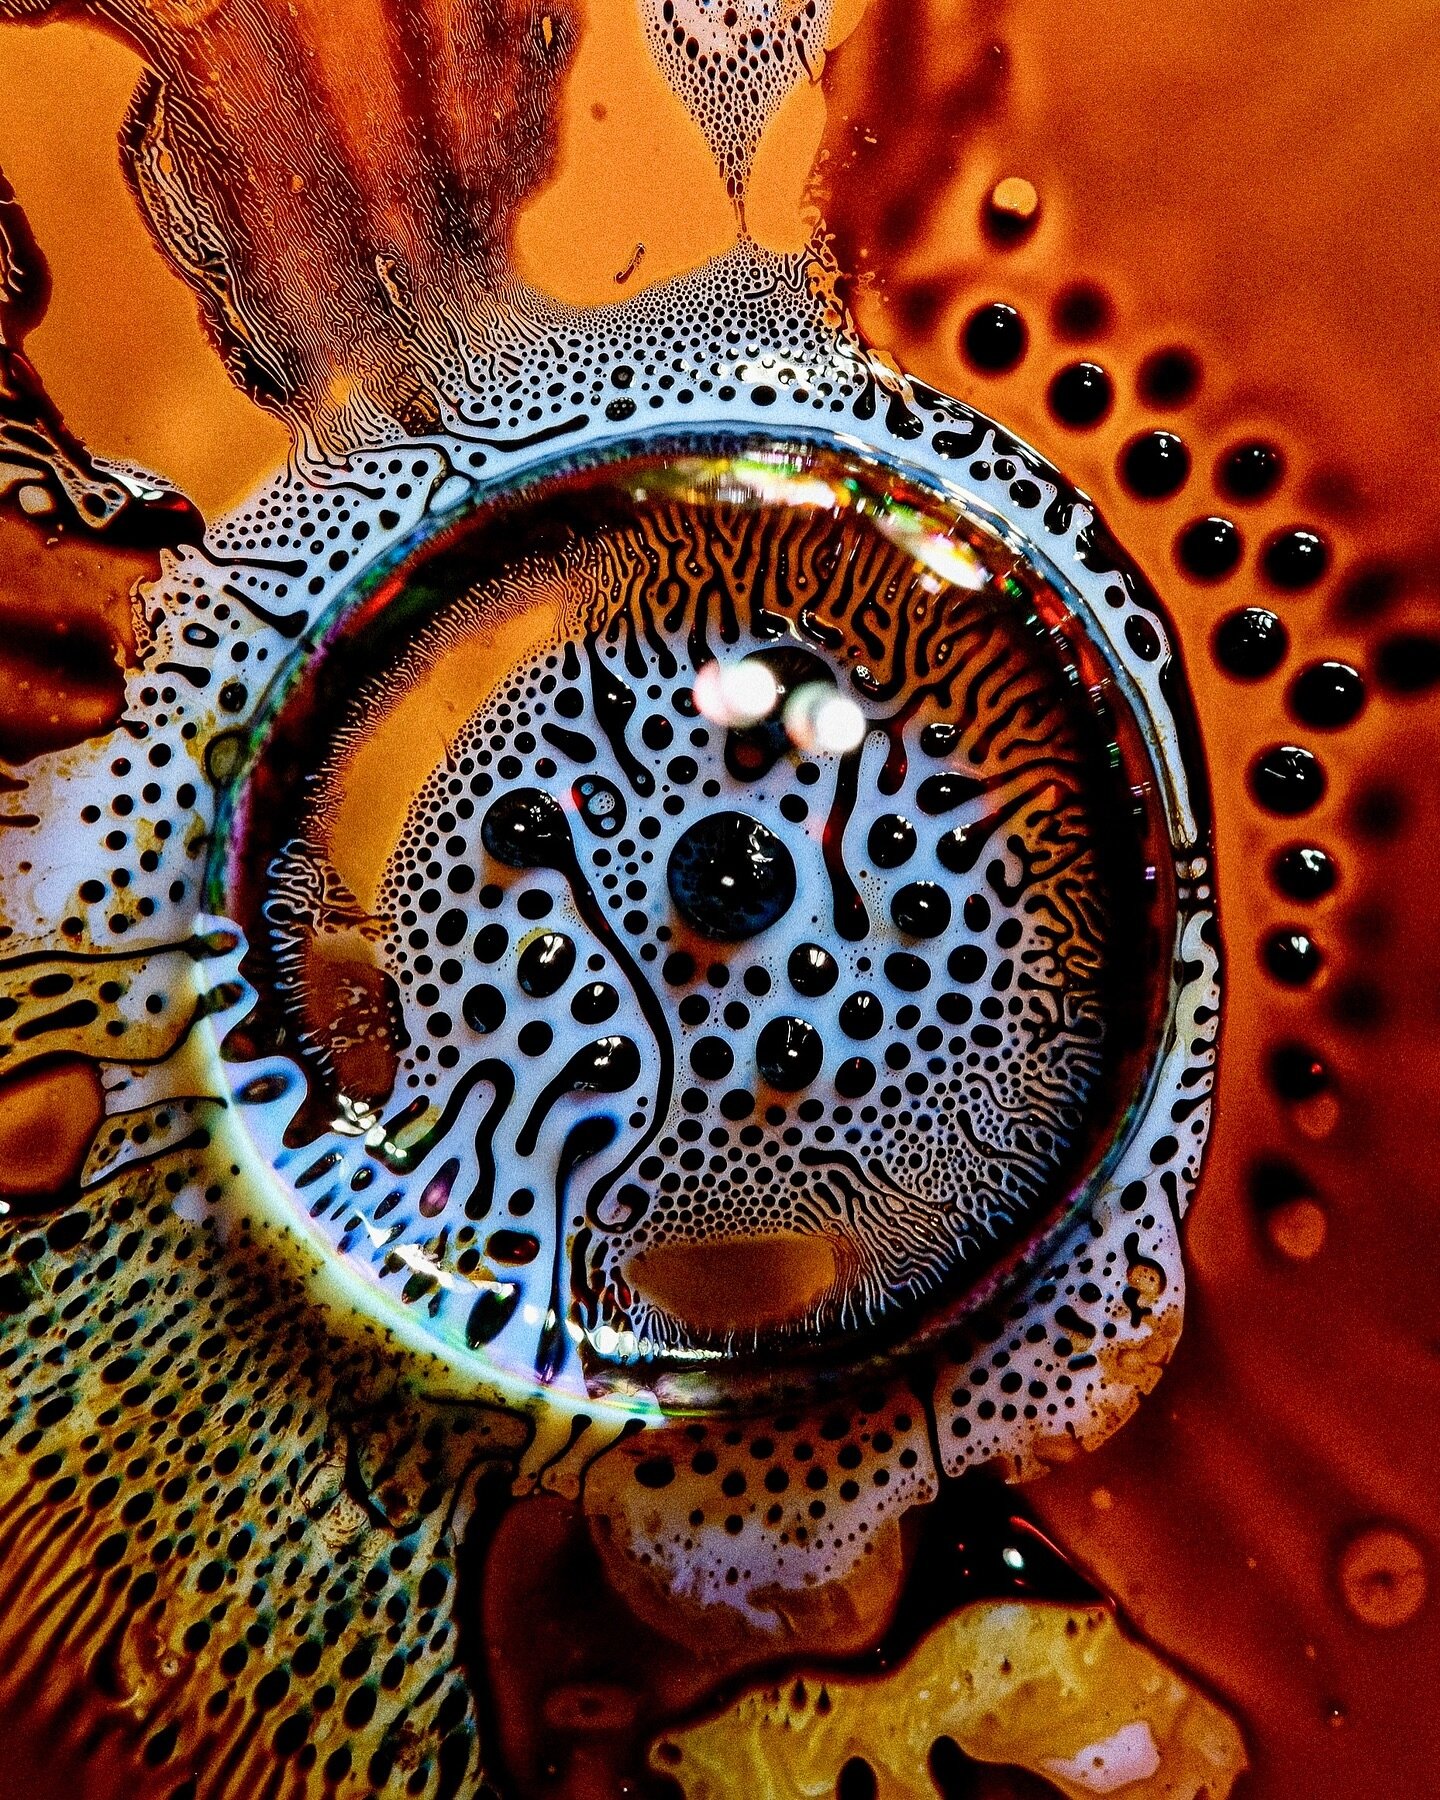 👁️ I see you 👁️ No CGI, just ferrofluid on a microscope slide &bull;
#abstractart #abstractphotography #microscopy #microscopyart #scifiart #scifiartist #scifiartwork #experimentalphotography #fluidart #liquidart #liquidlight #hypnotic #surreal #ma